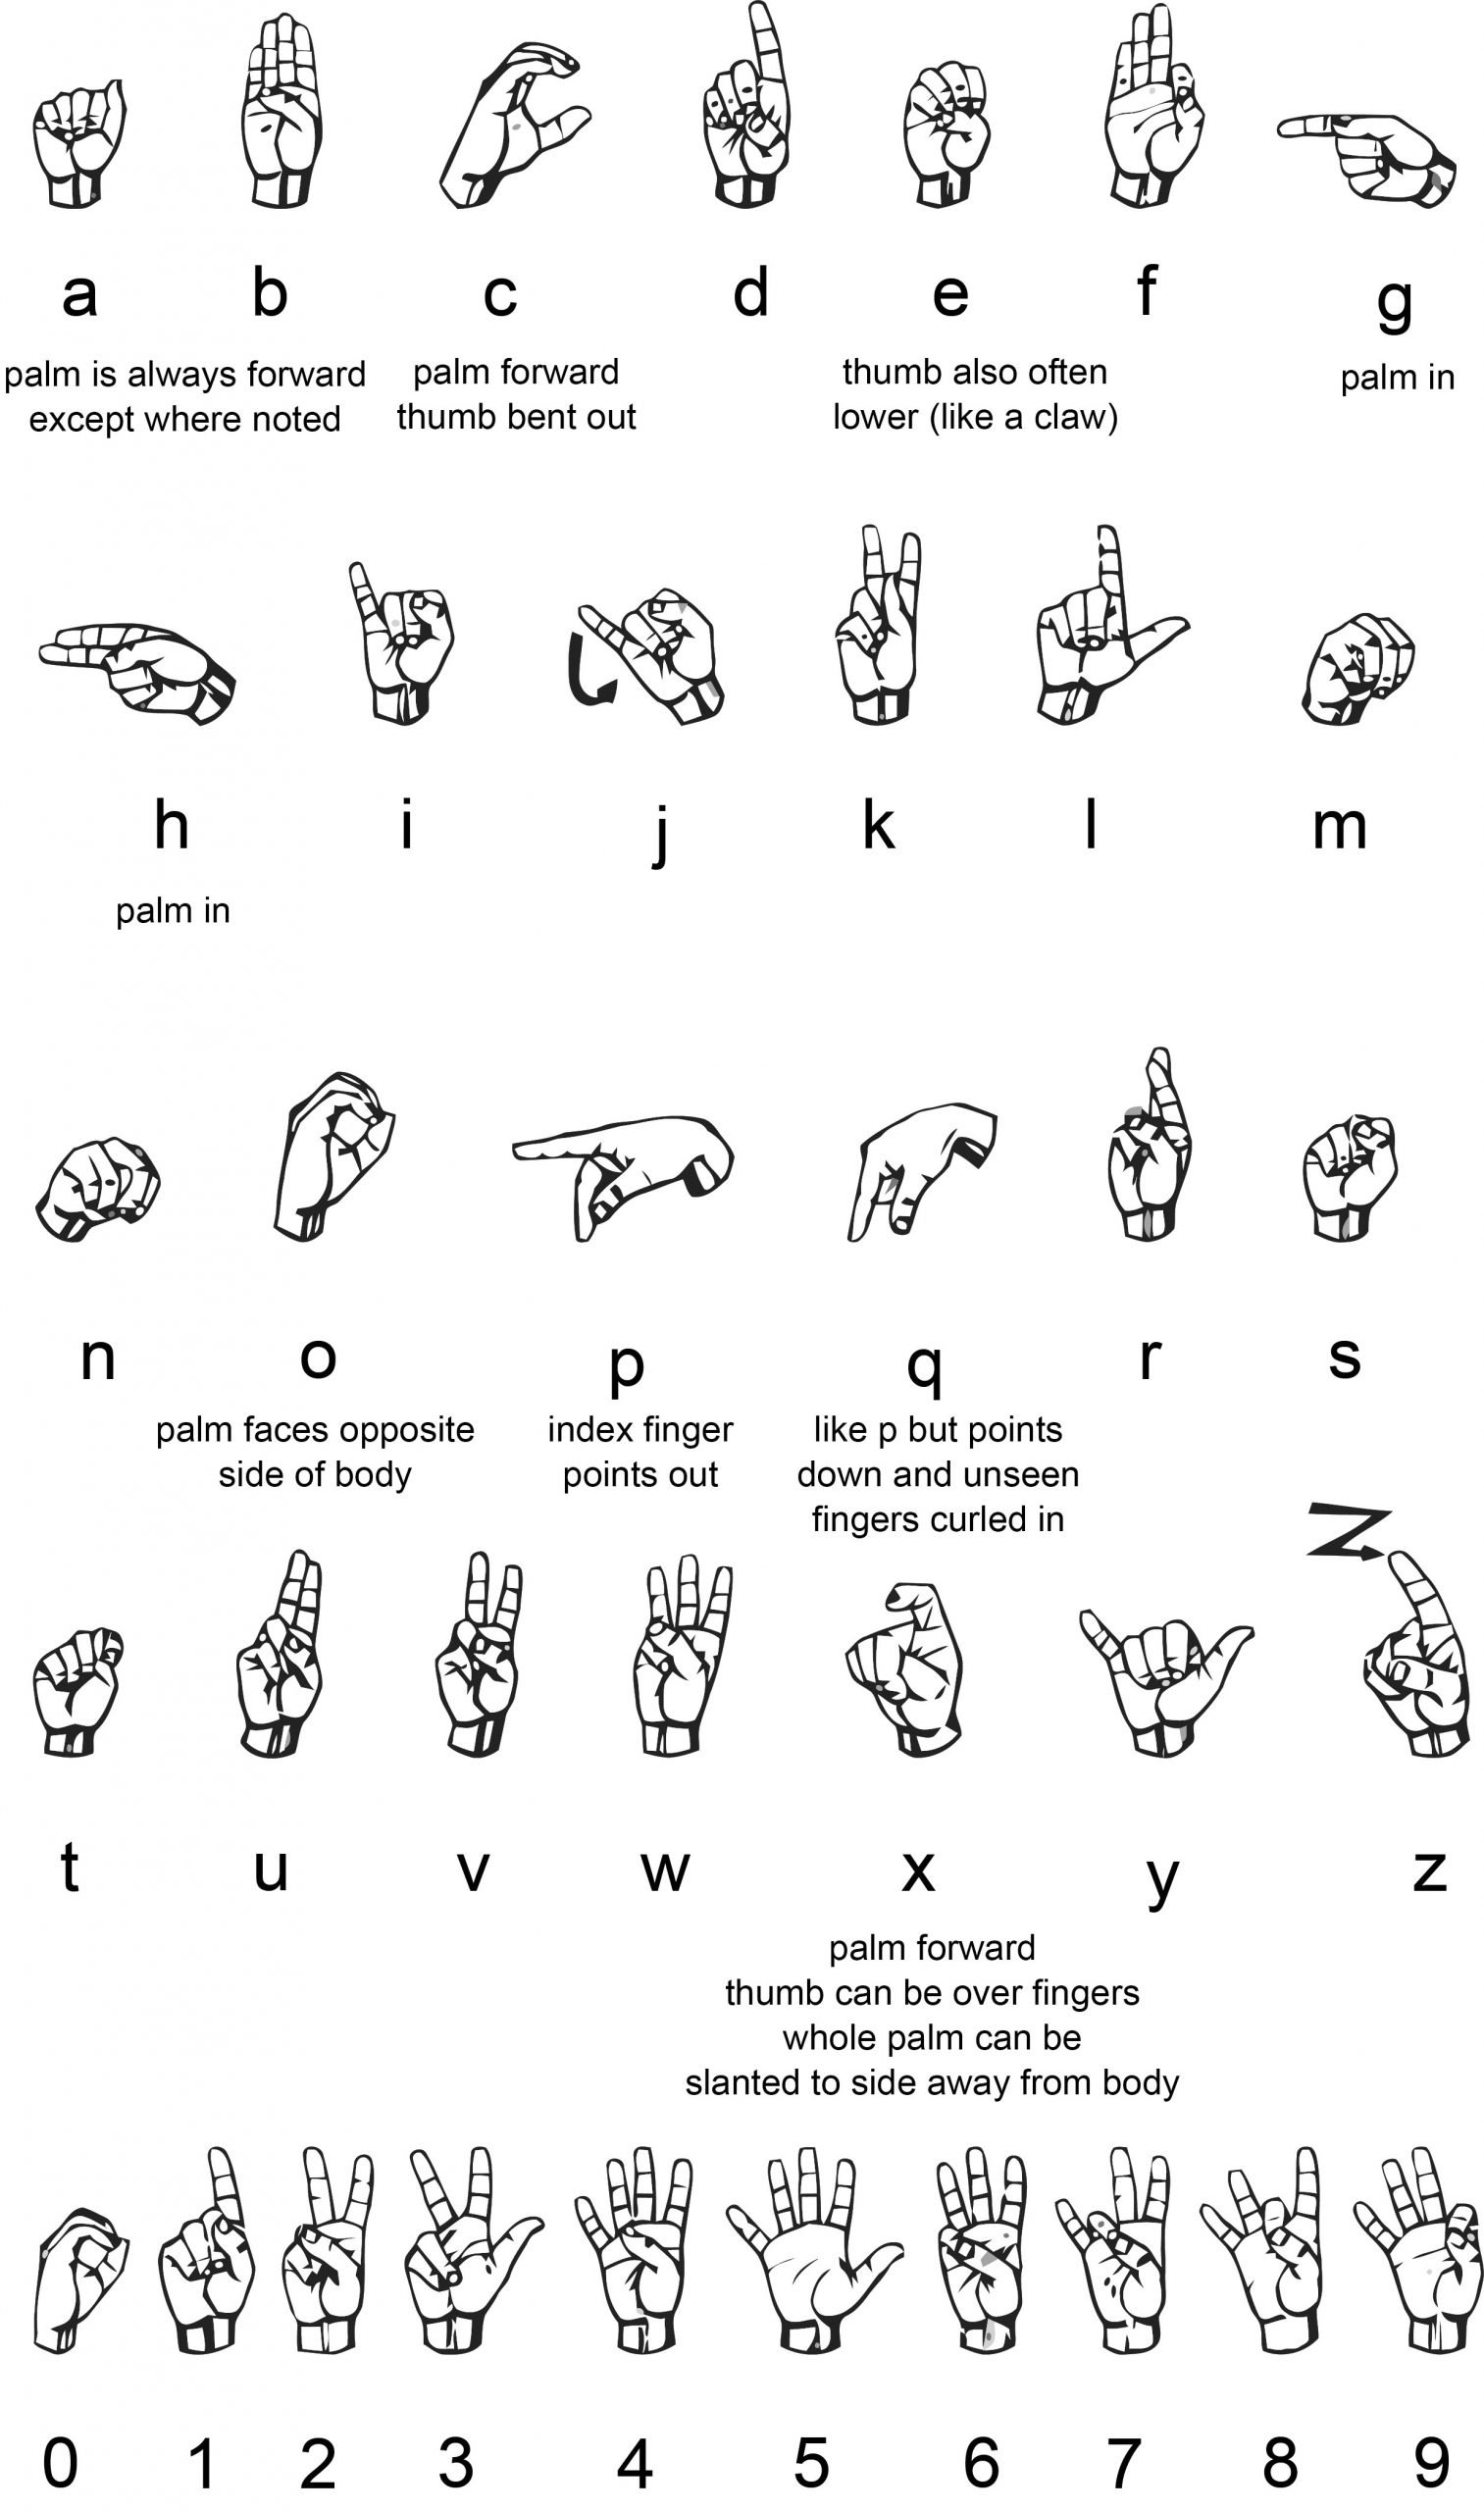 American Sign Language fingerspelling alphabets Image